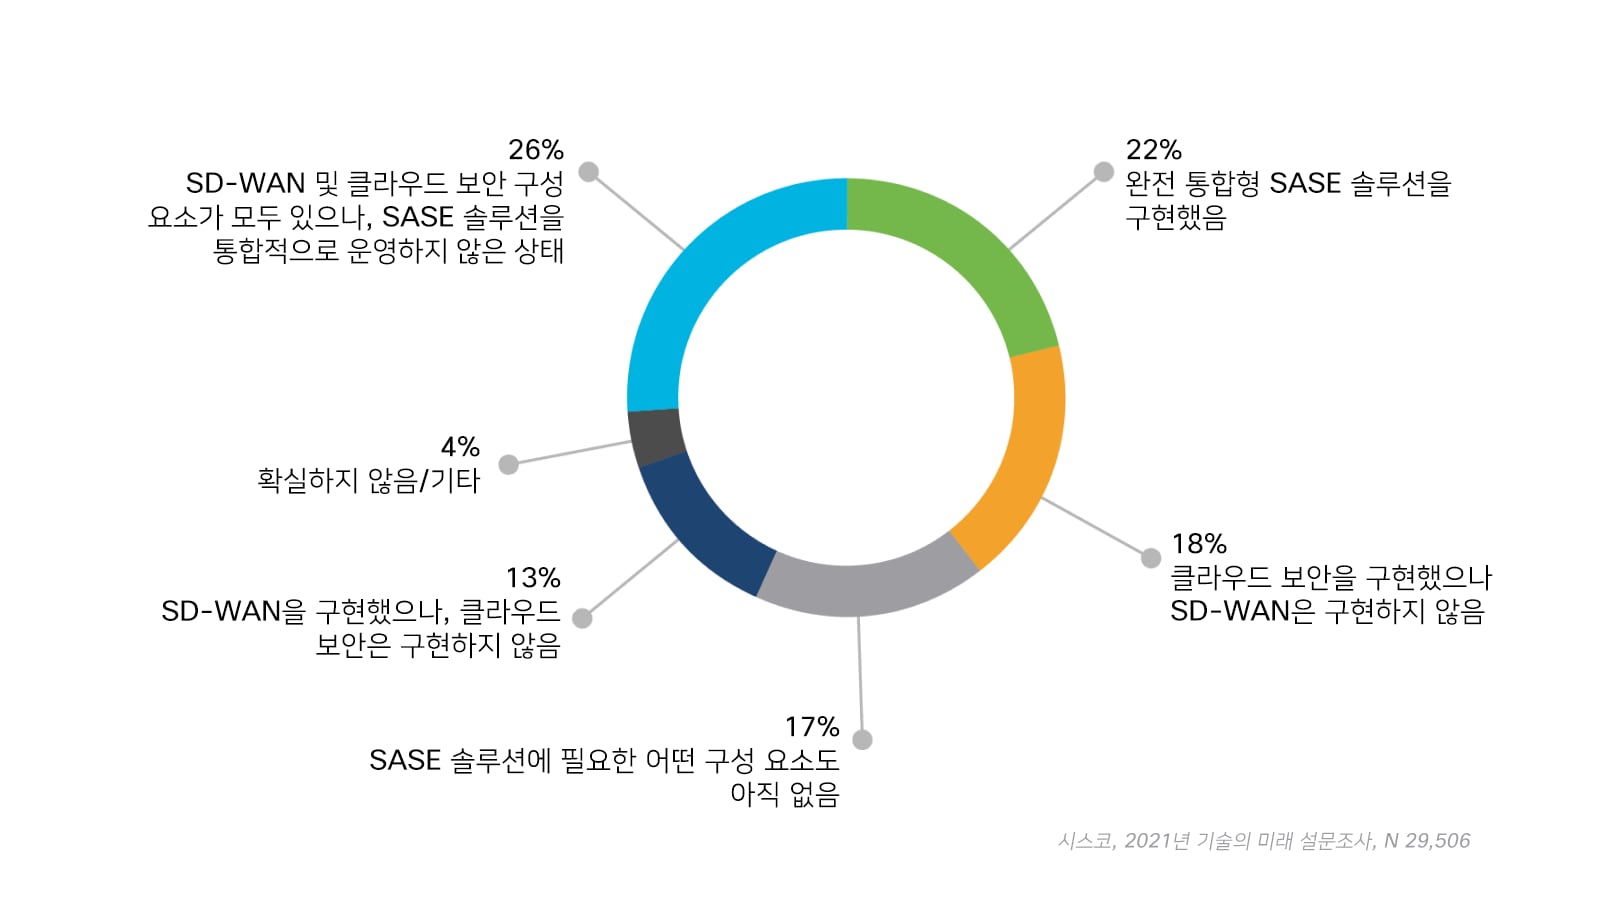 SASE 여정의 다양한 단계에 있는 응답자의 비율을 보여주는 그래프 26%는 SD-WAN 및 클라우드 보안 구성 요소가 모두 있으나 통합형 SASE 솔루션을 완전히 운영하는 단계에는 아직 이르지 못했습니다. 22%는 완전 통합형 SASE 솔루션을 구현했고, 18%는 클라우드 보안을 구현했으나 SD-WAN는 구현하지 않았습니다. 17%는 SASE 솔루션에 필요한 어떤 구성 요소도 아직 구현하지 않았습니다. 13%는 SD-WAN을 구현했으나 클라우드 보안은 구현하지 않았습니다. 잘 모름/기타 응답은 4%였습니다.